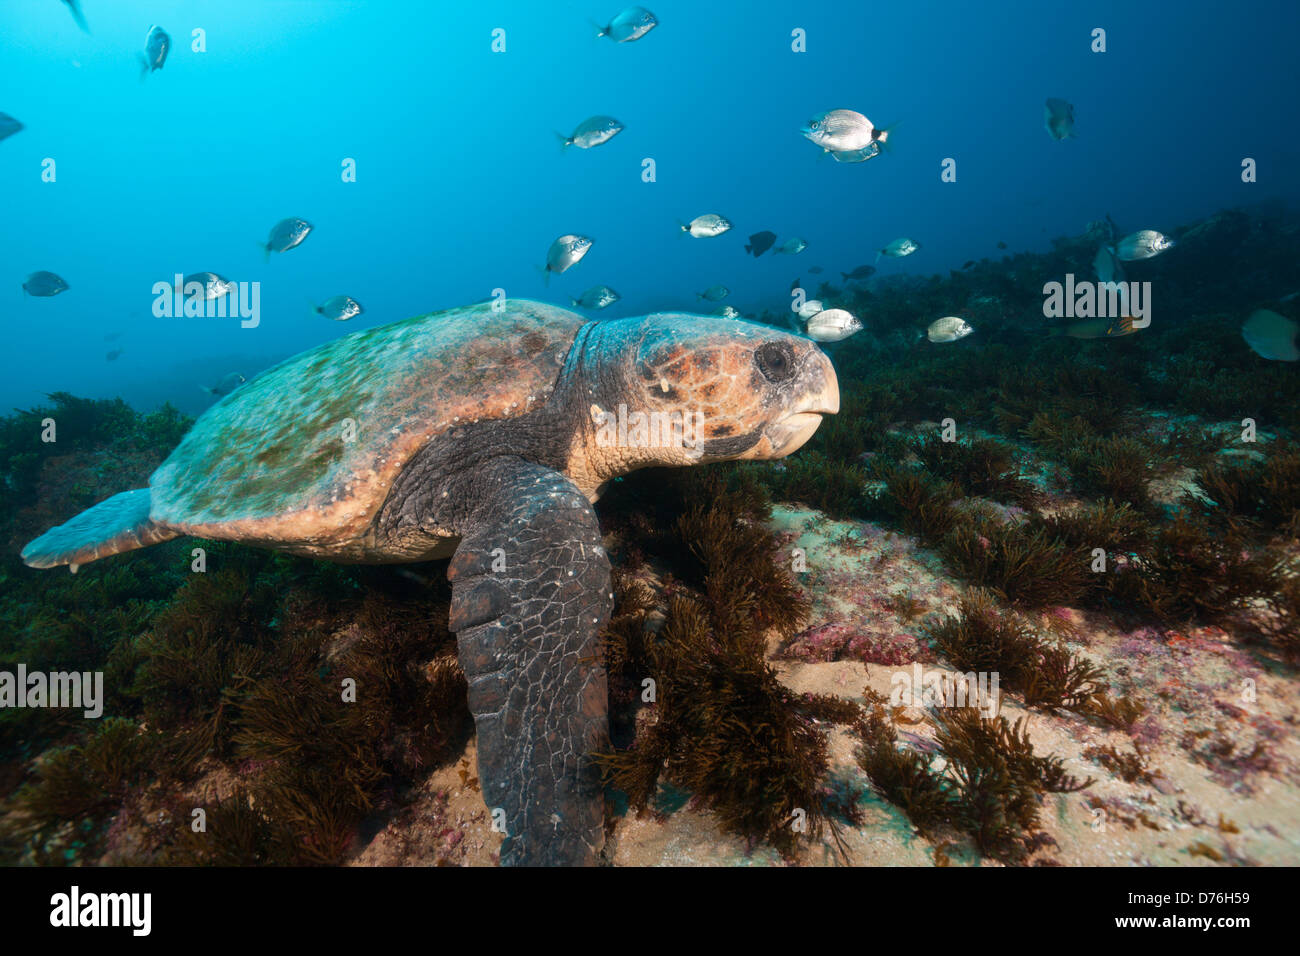 Loggerhead Sea Turtle, Caretta caretta, Aliwal Shoal, Indian Ocean, South Africa Stock Photo